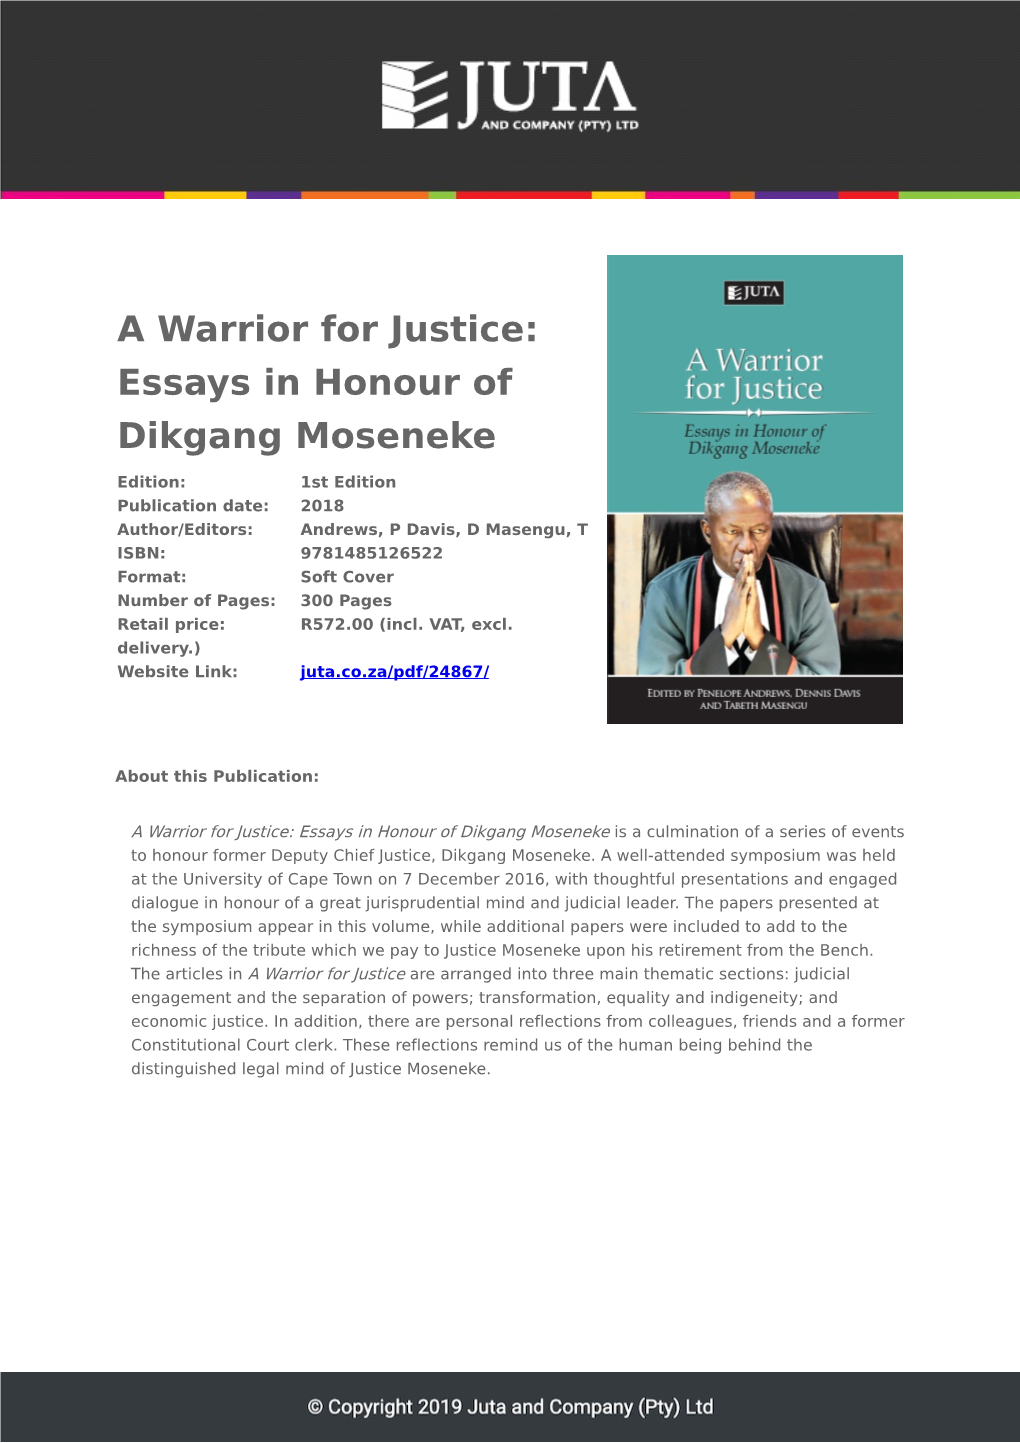 A Warrior for Justice: Essays in Honour of Dikgang Moseneke